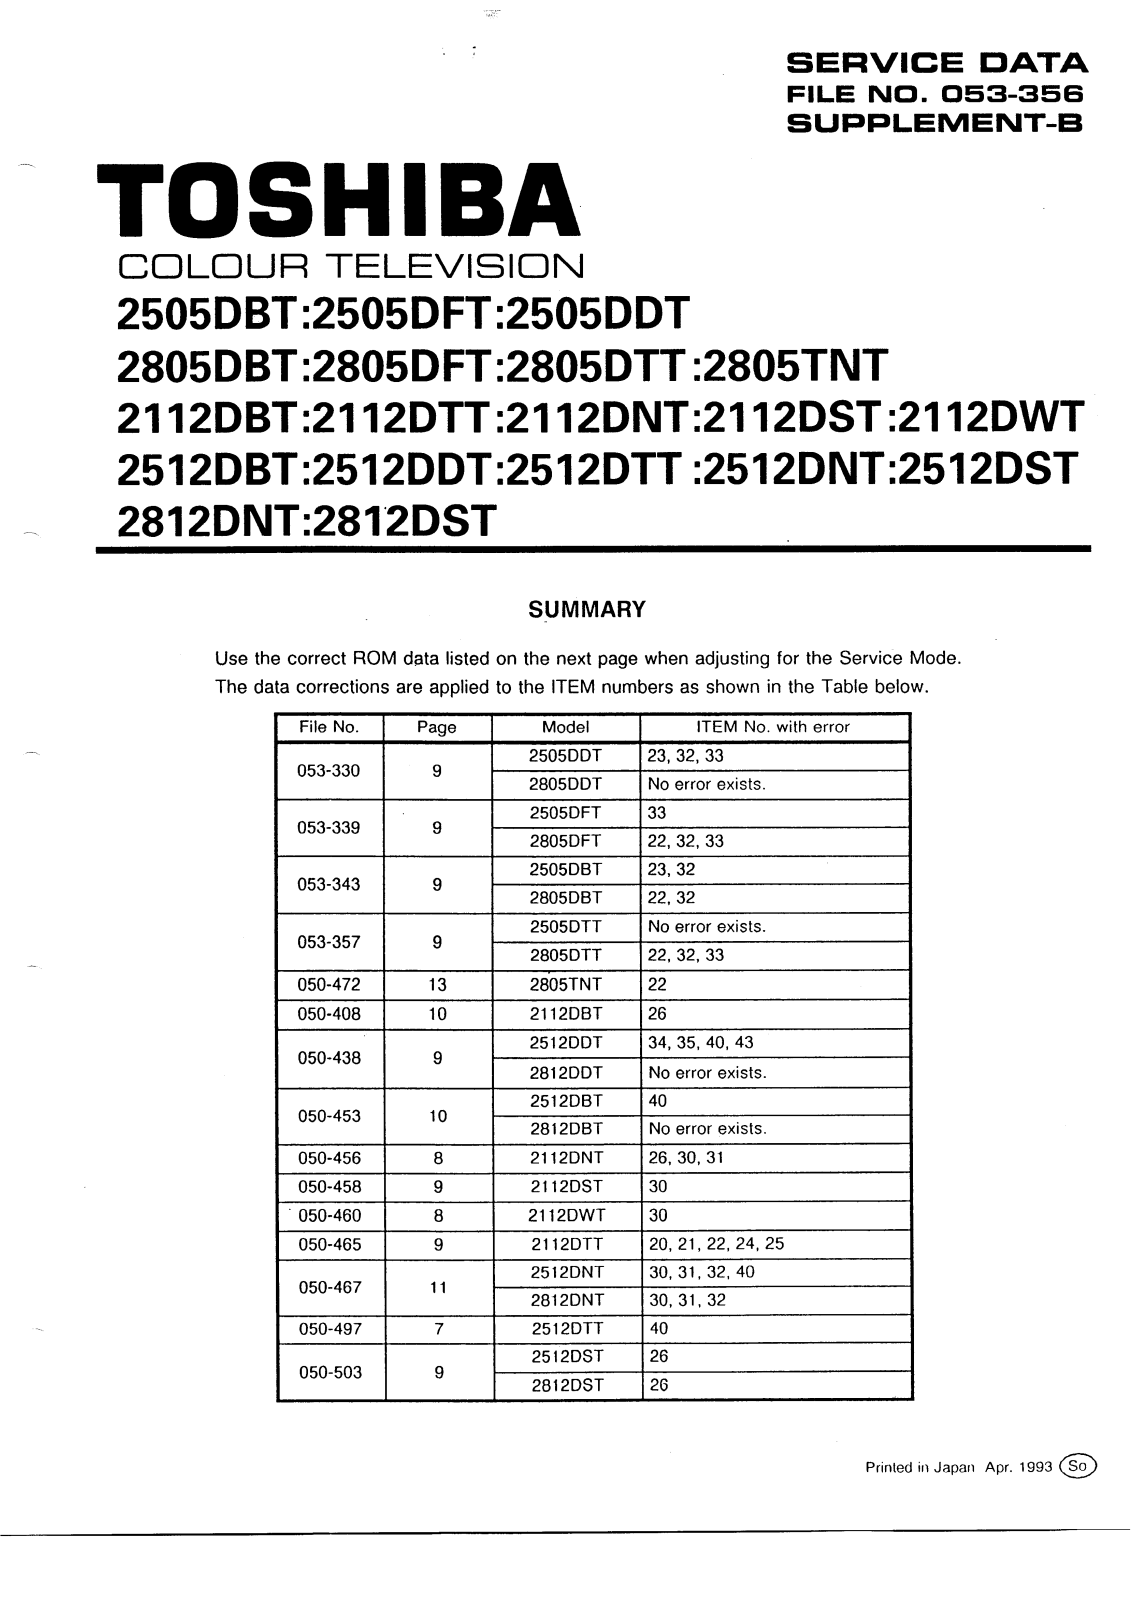 Toshiba 2505DBT, 2505DFT, 2505DDT, 2805DBT, 2805DFT Service Manual